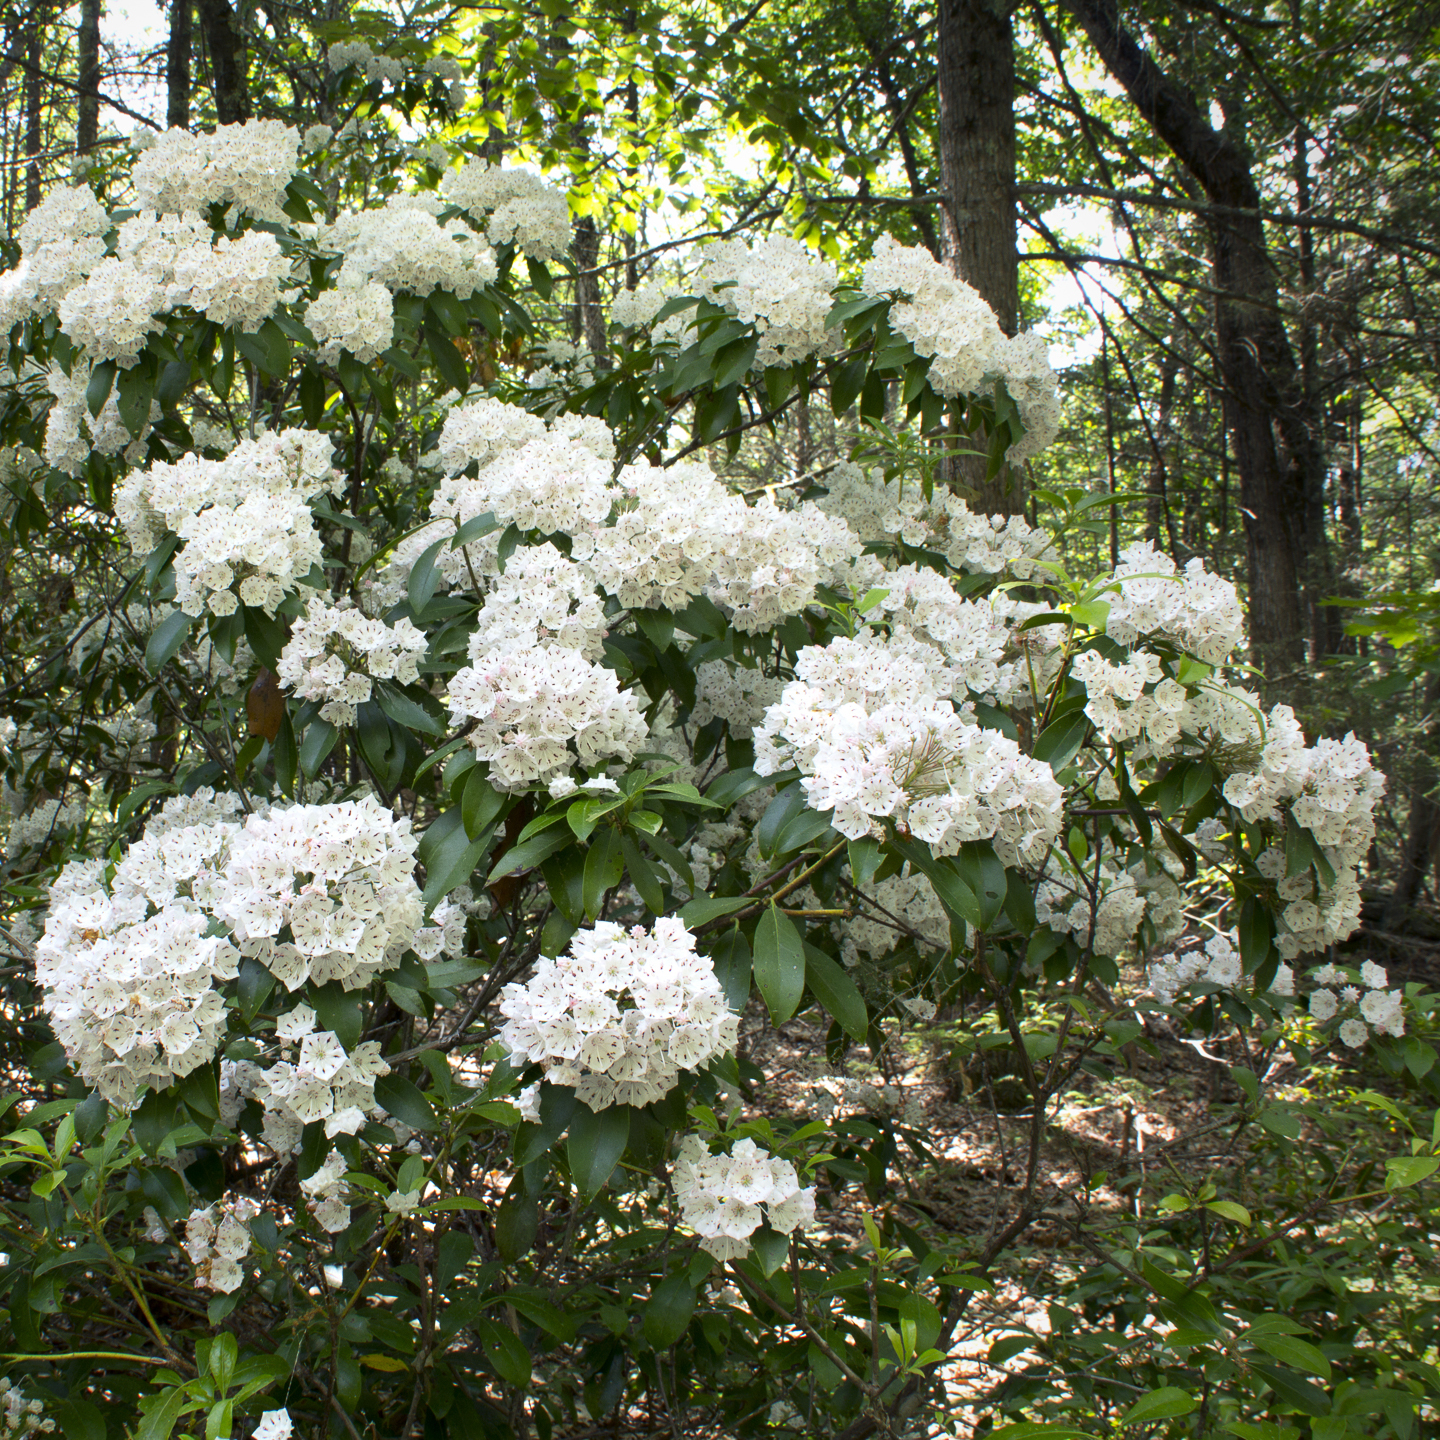 White mountain laurel blooming in the wild ©duke2015 - stock.adobe.com